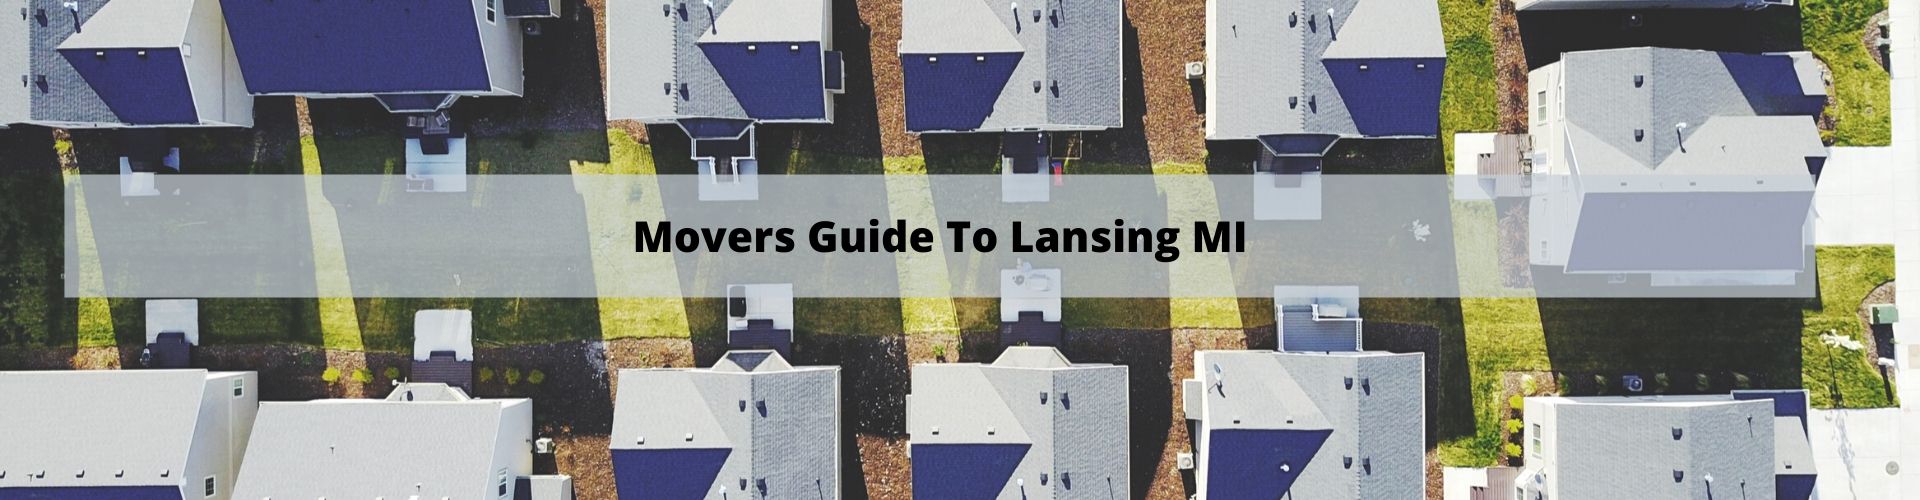 Aerial Neighborhood - Movers Guide to Lansing MI